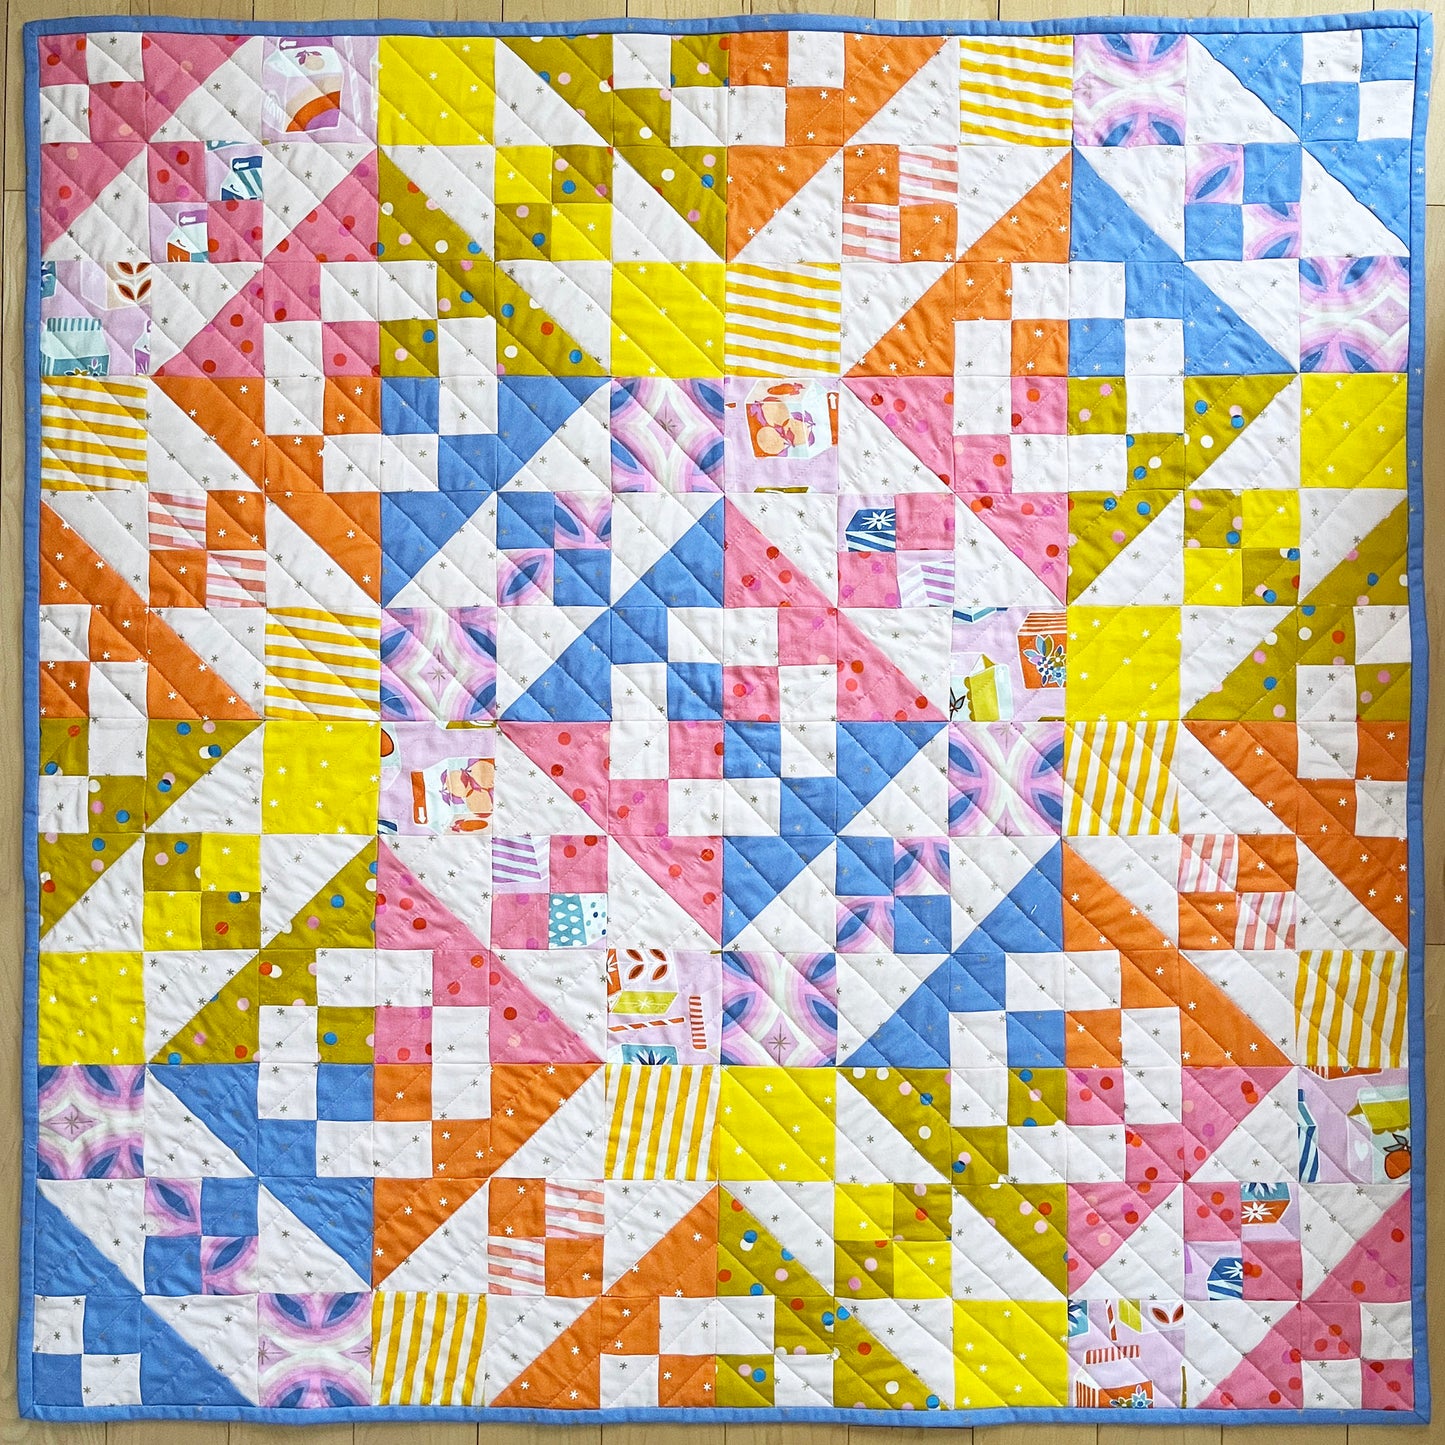 Sugarcubes Quilt Pattern - PDF